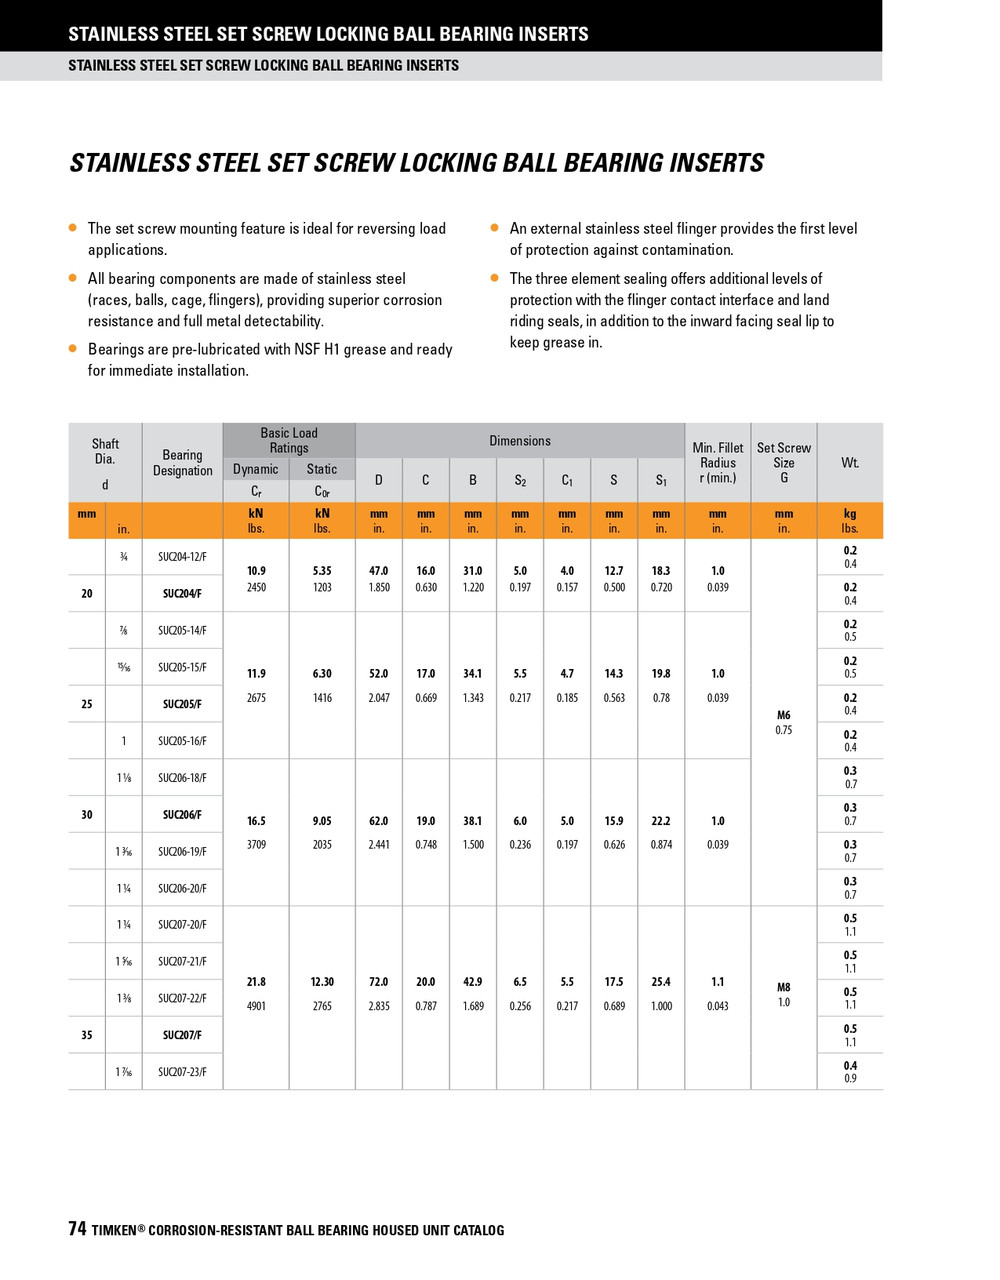 1-11/16" Stainless Spherical Ball Bearing Insert w/Set Screws   SUC209-27/FVSL613